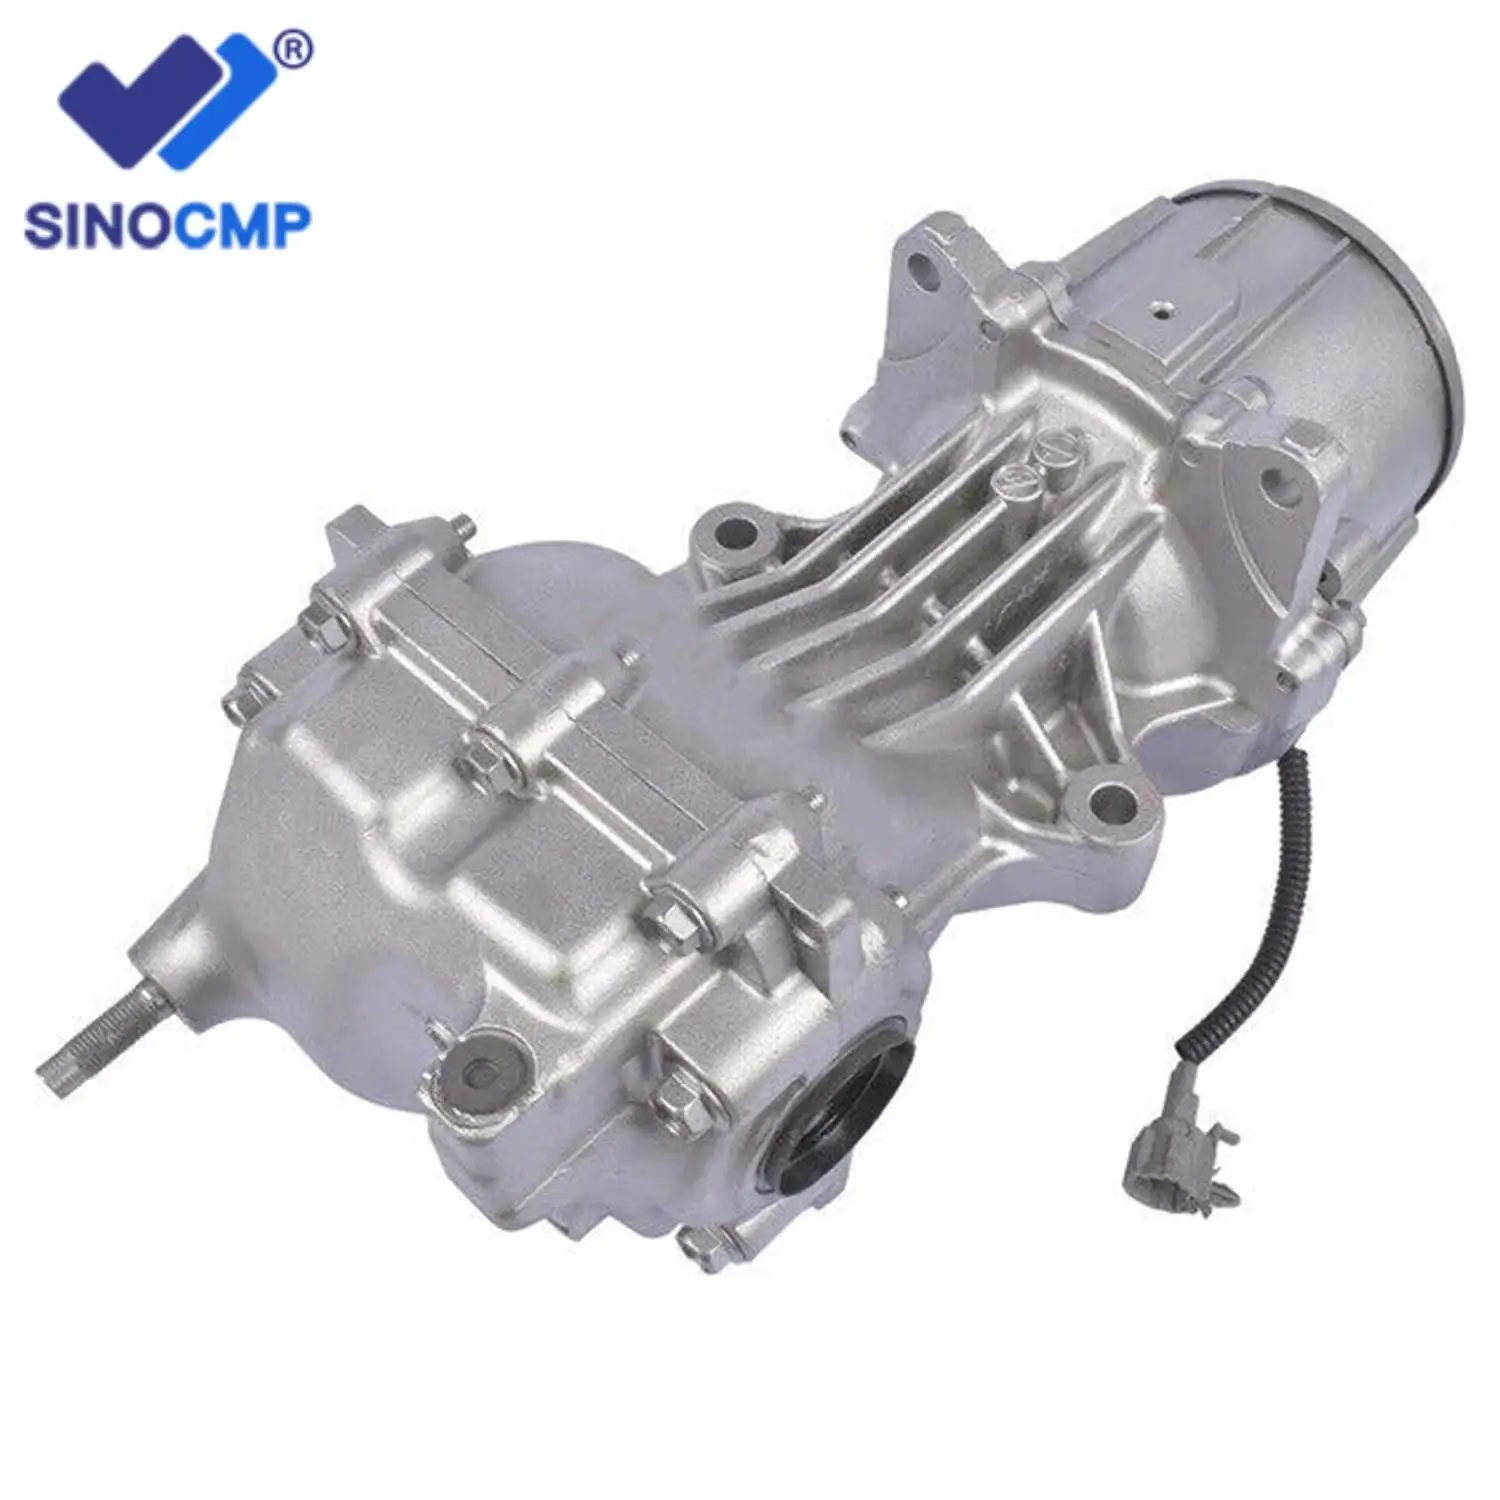 

SINOCMP Bracket Rear Differential 4x4 Fits Nissan Rogue 5.173 Ratio 14-20 Stk L46C10 383004BF0A 240277FV0A Remanufactured